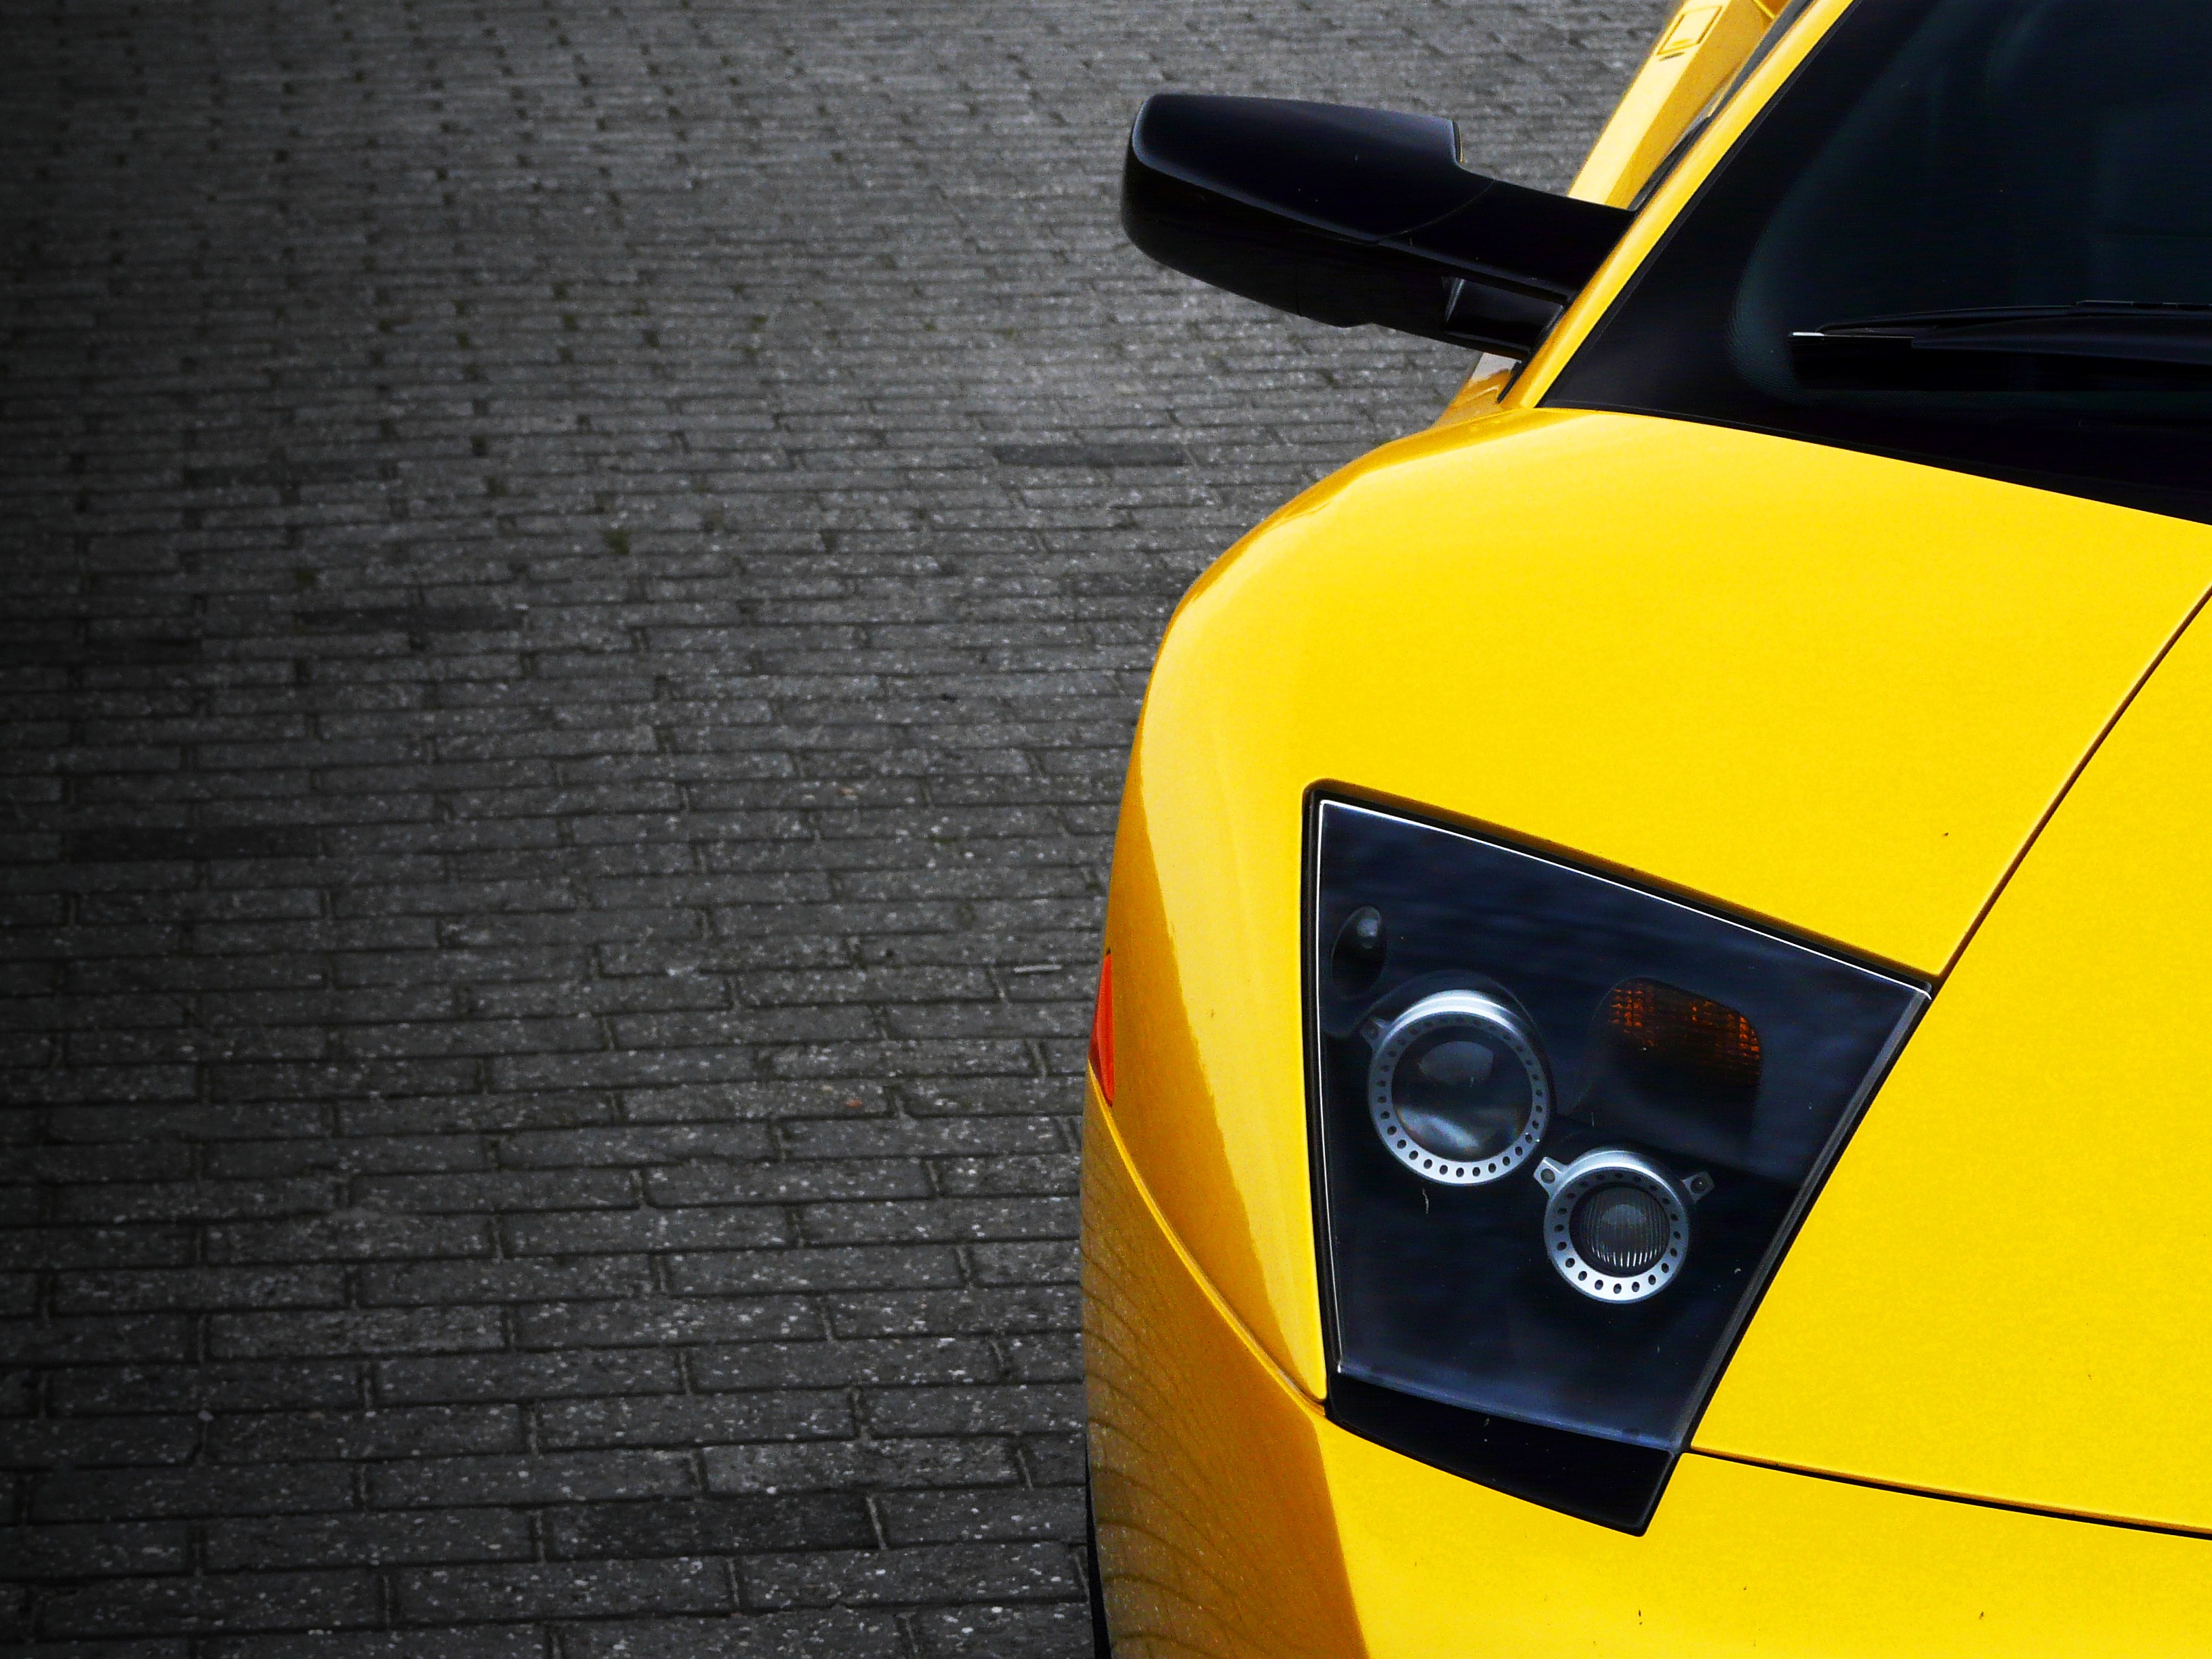 General 3264x2448 car yellow cars pavements yellow Lamborghini italian cars Volkswagen Group